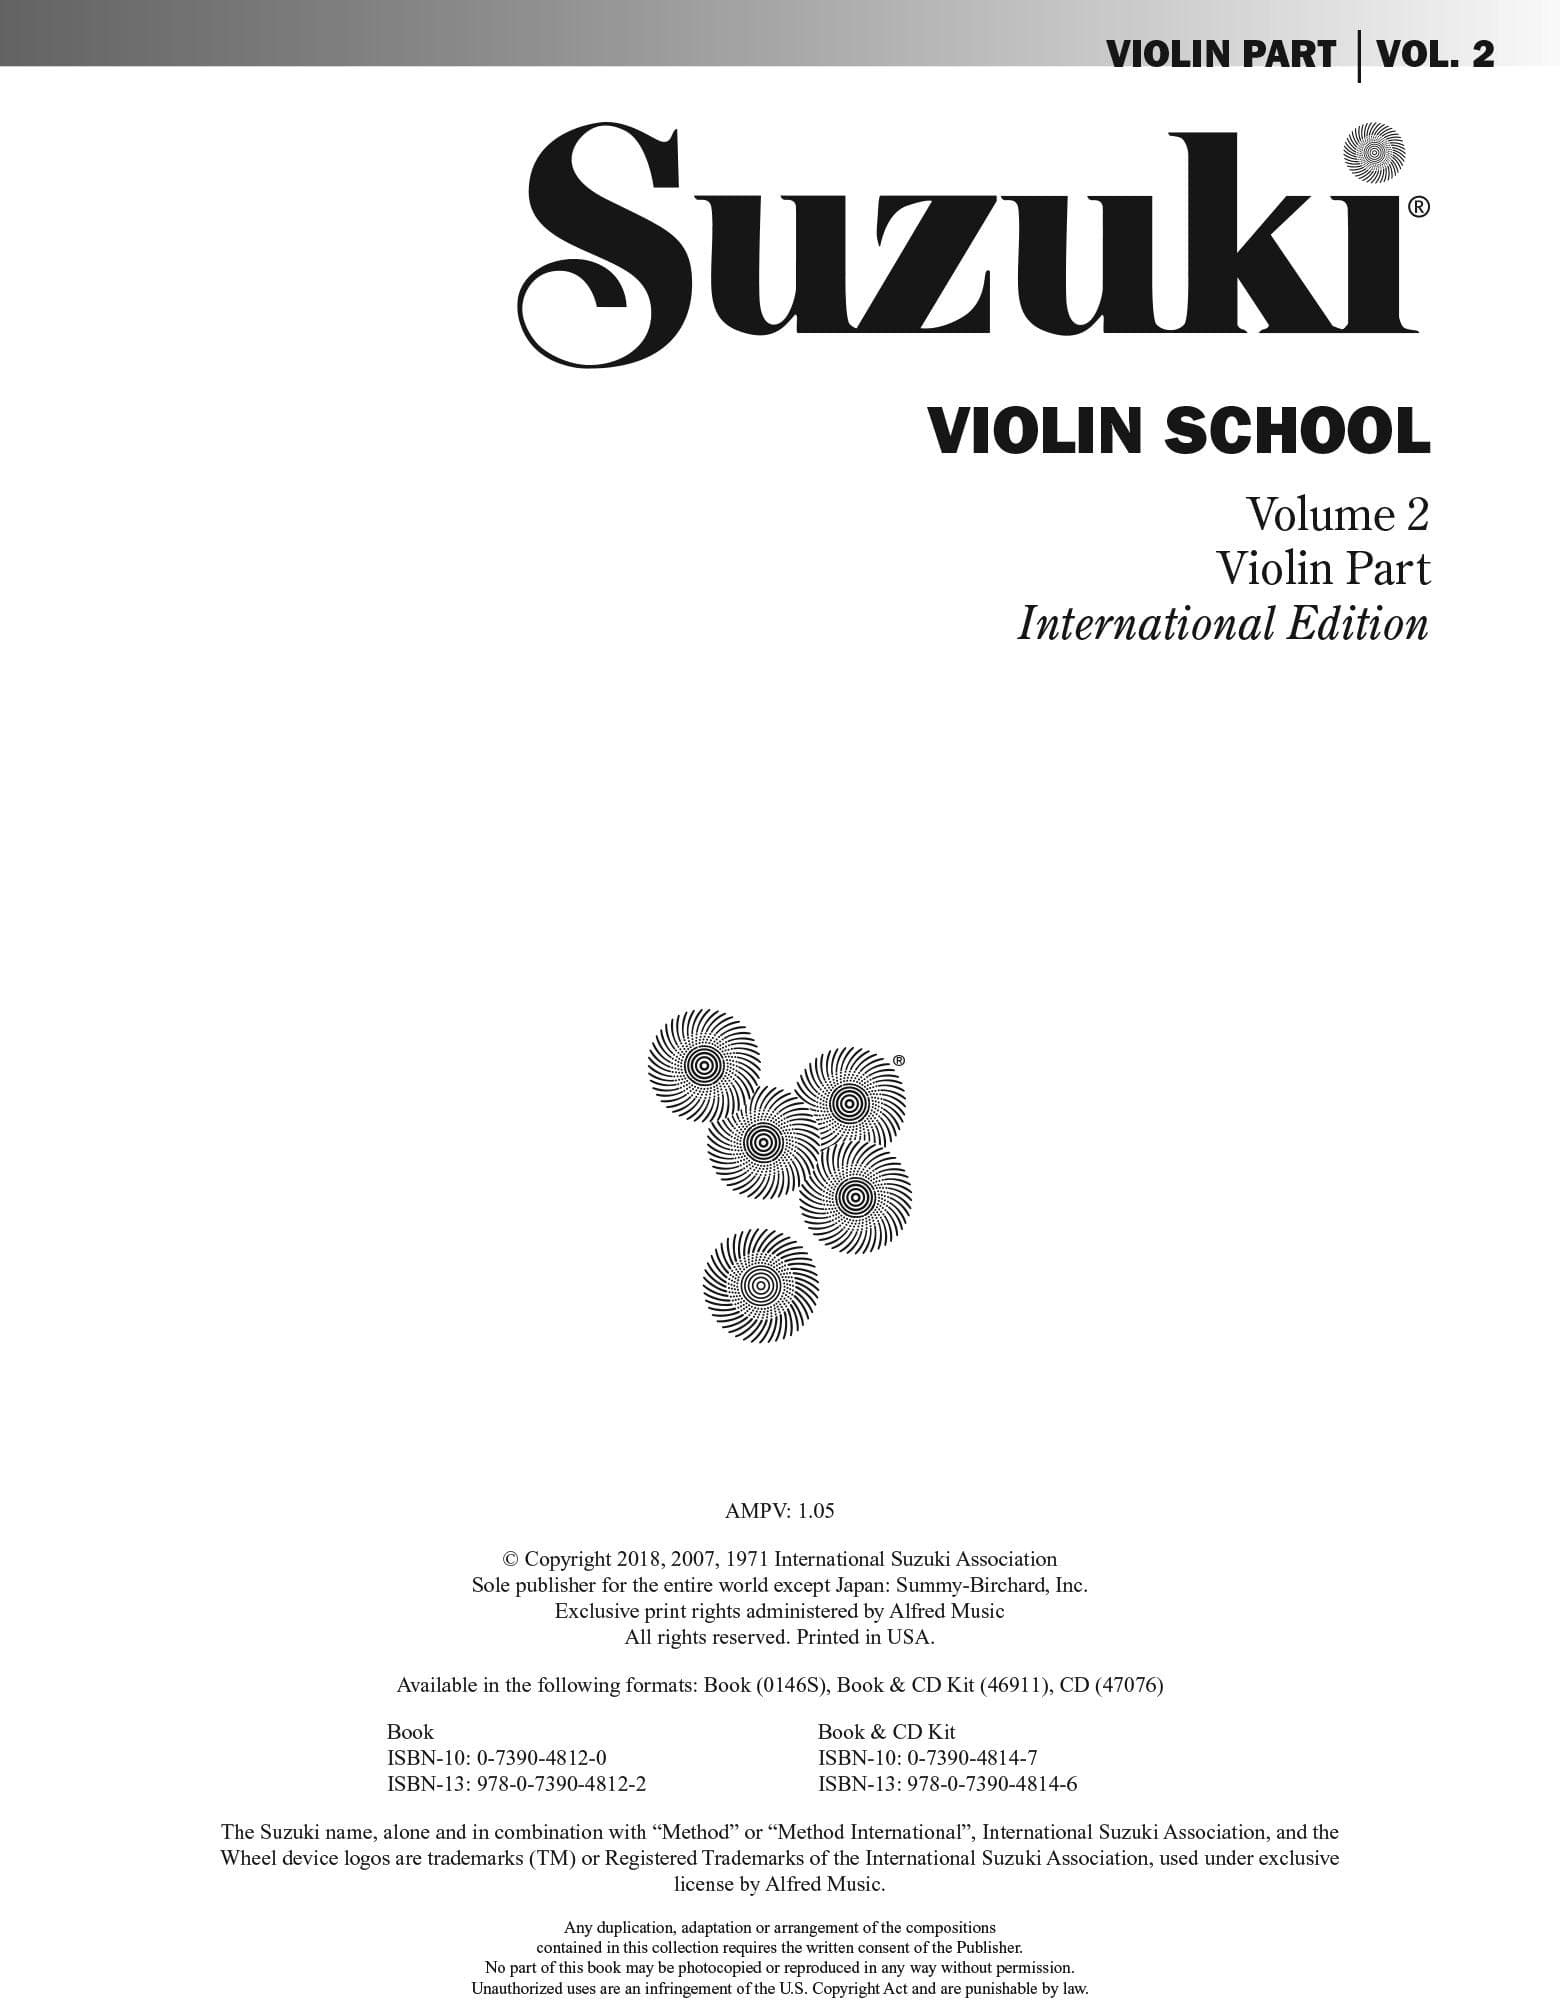 Suzuki Violin School Method Book and CD, Volume 2, Performed by Hilary Hahn